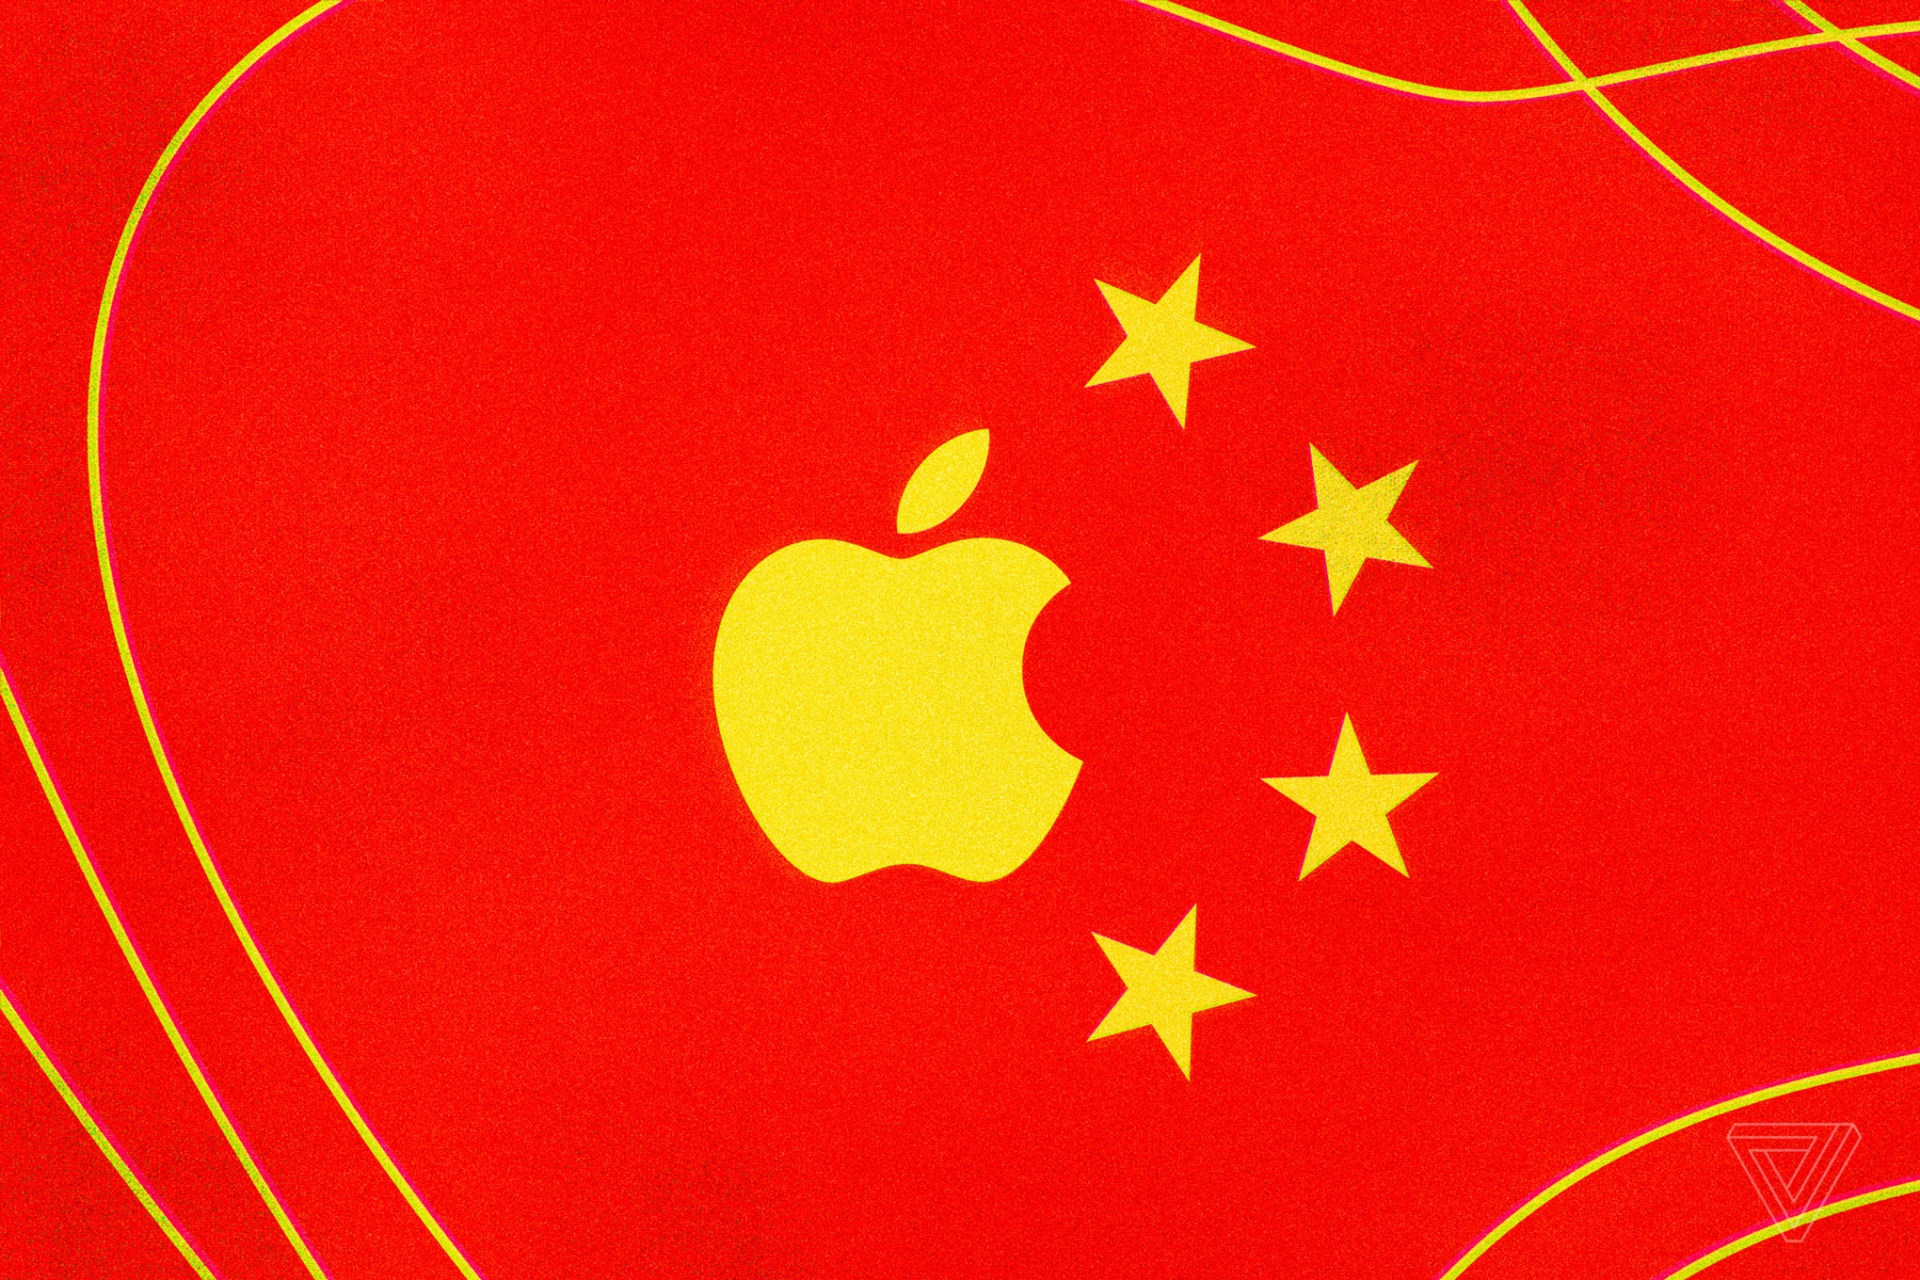 Дракон победил — Apple удалила приложение, используемое протестующими Гонконга